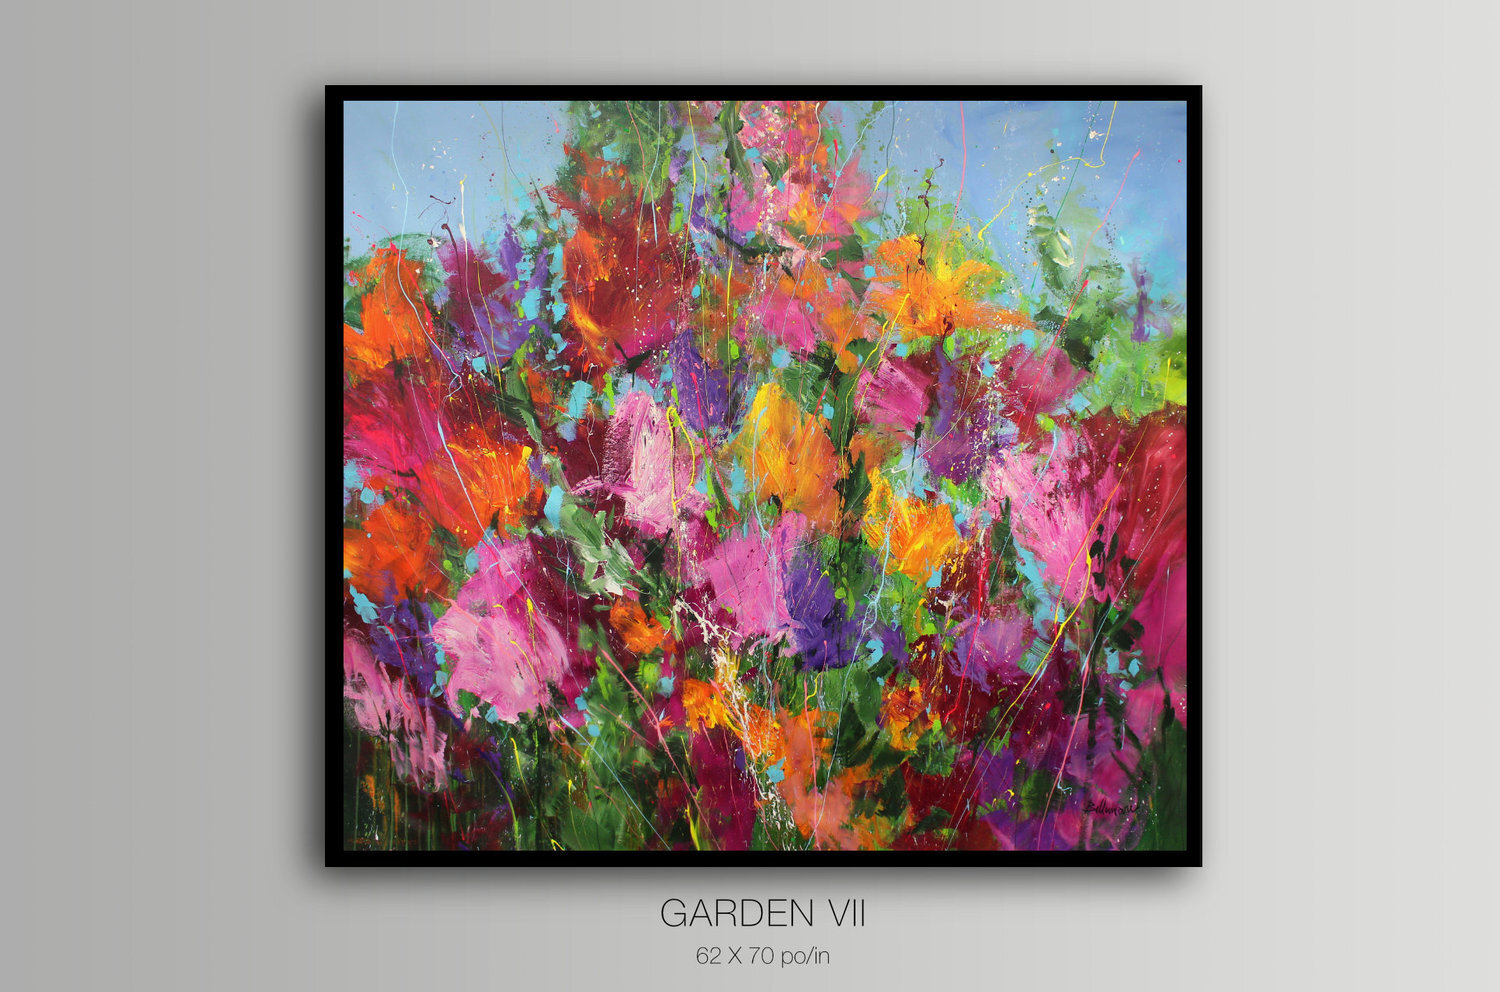 Garden VII - Organik Collection